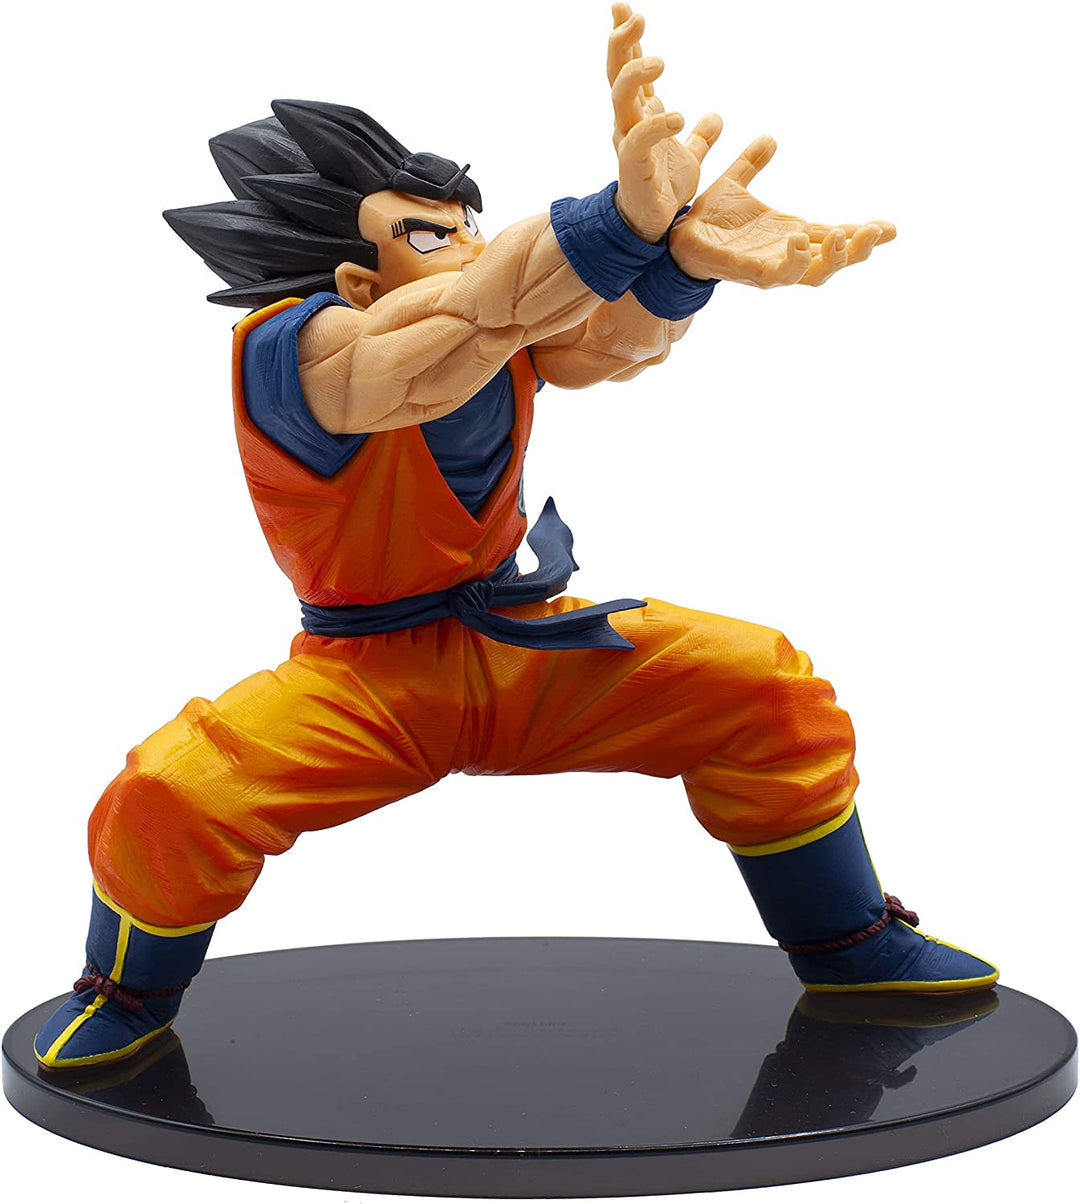 Banpresto - Dragon Ball - Super Super Zenkai Solid - Goku Vol. 2 Figure